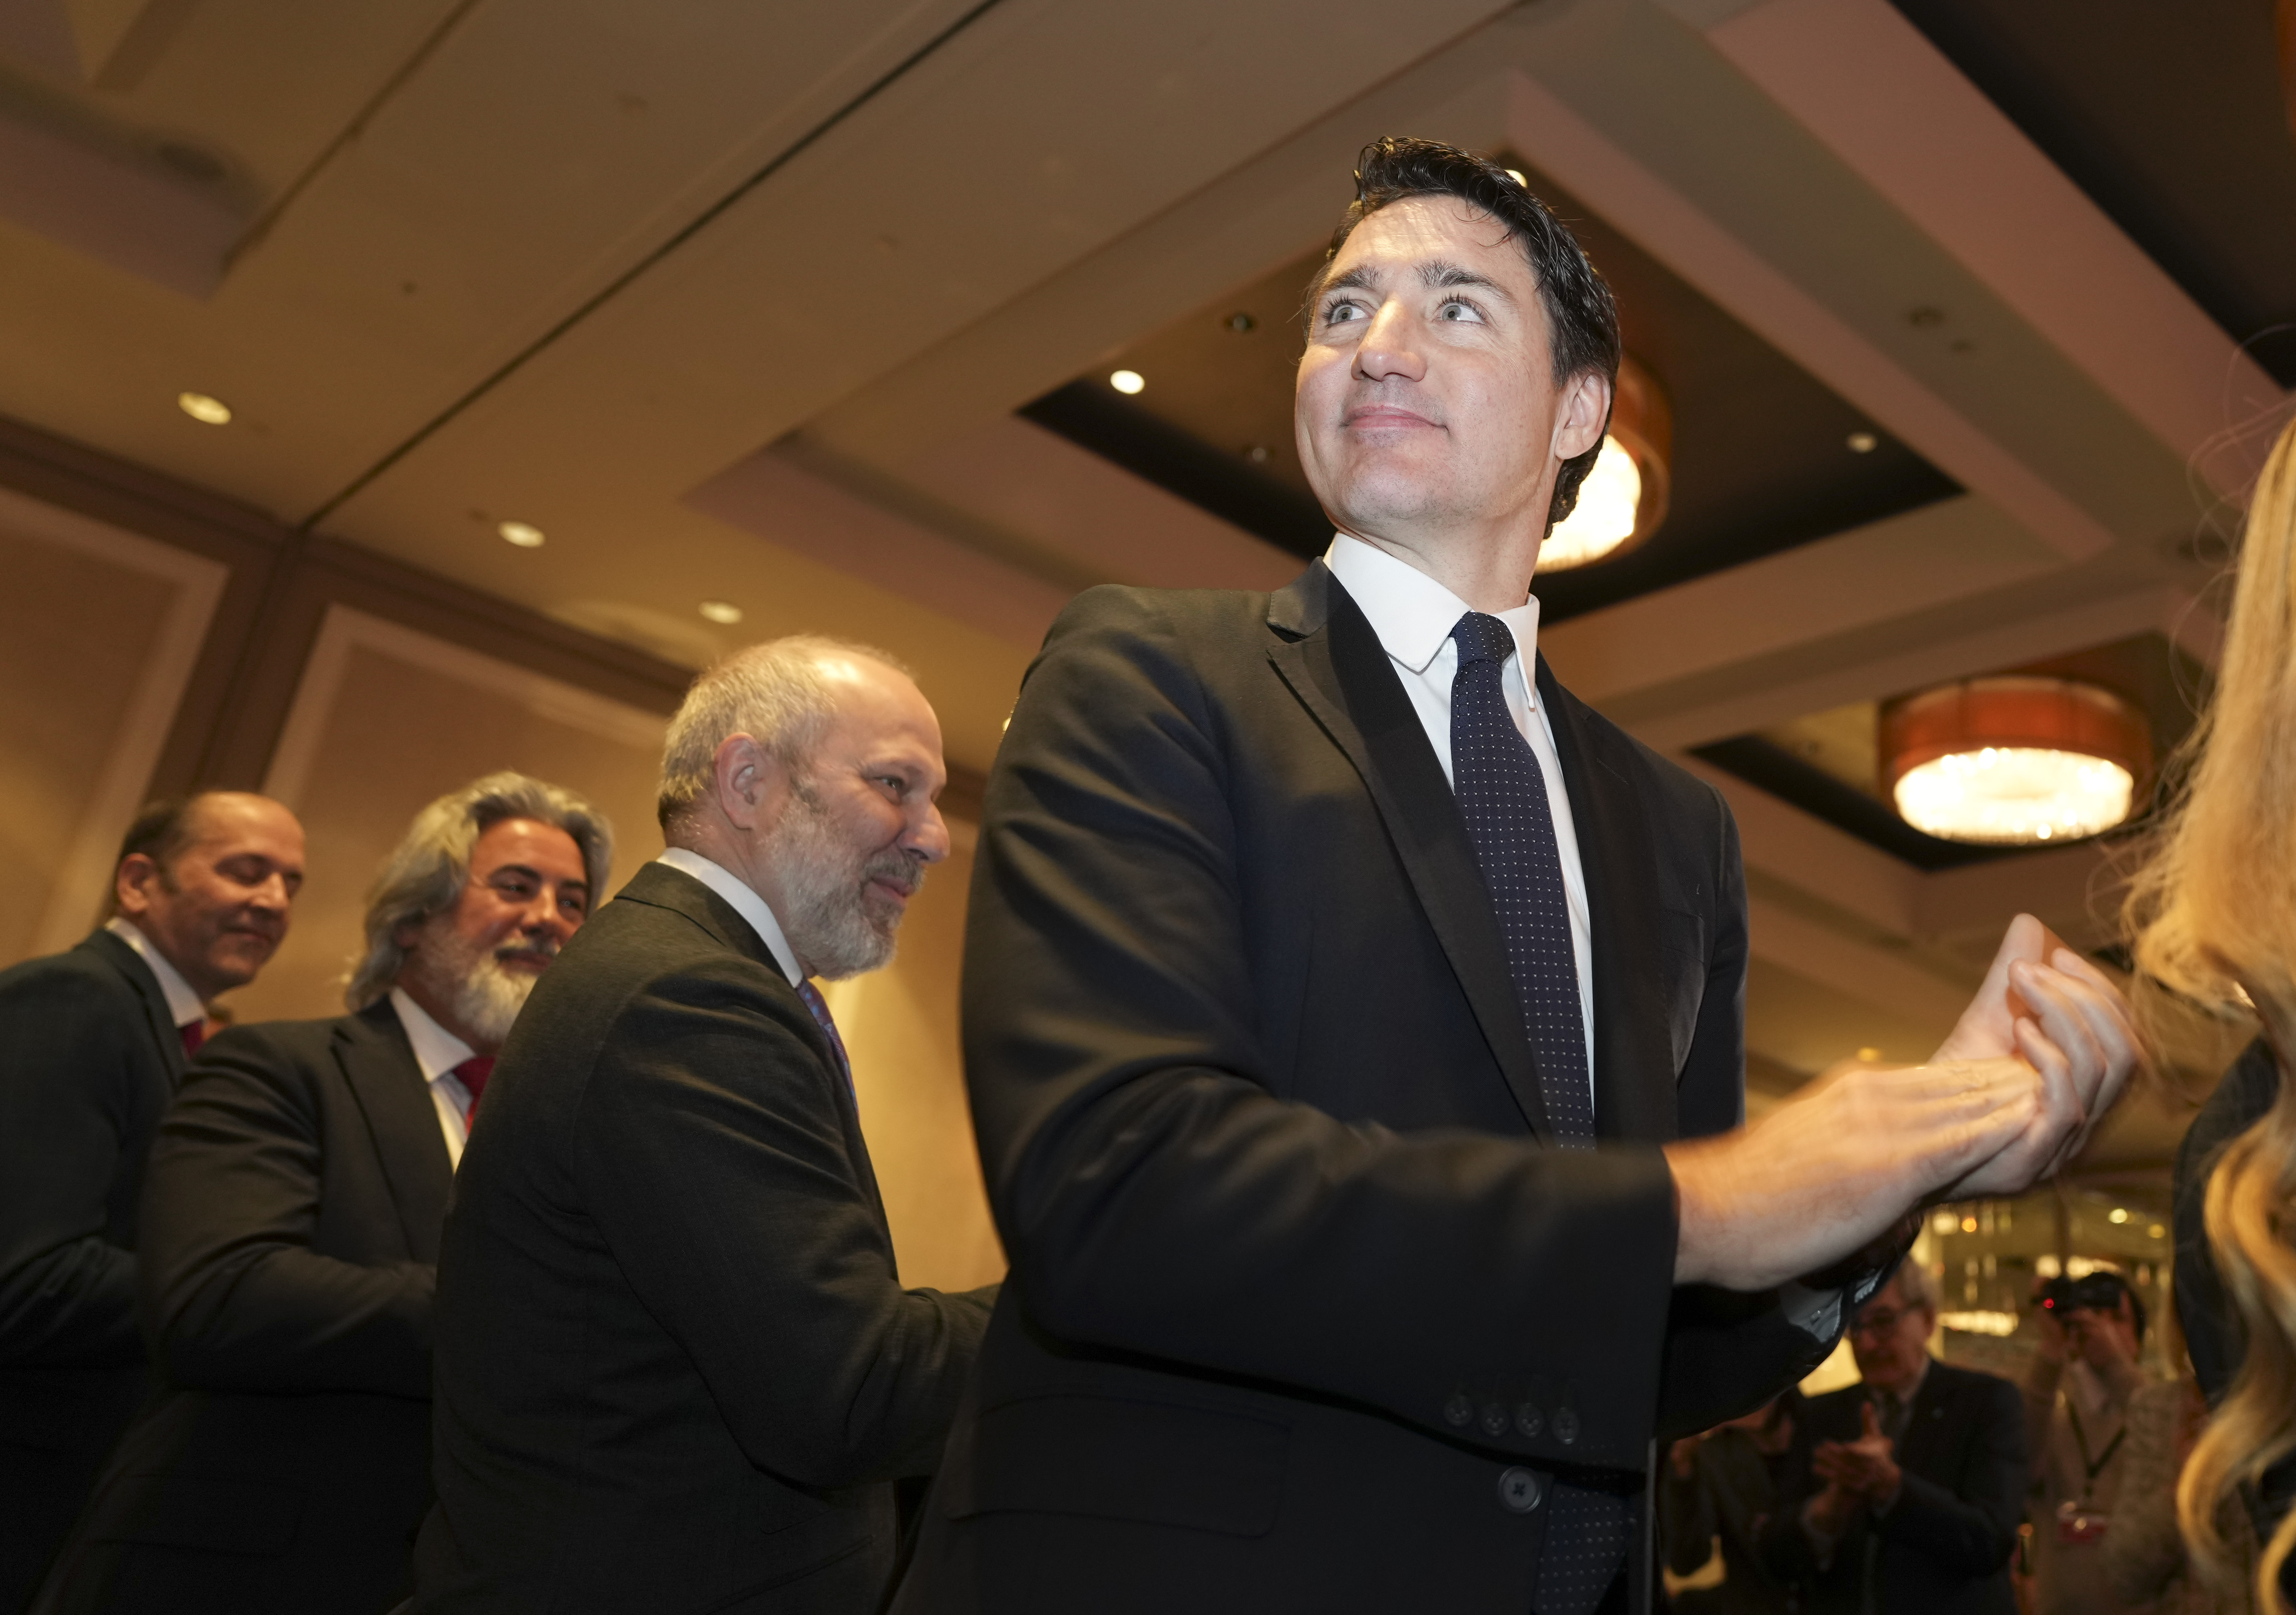 Committee calls interim ethics watchdog amid Trudeau Jamaica trip scrutiny